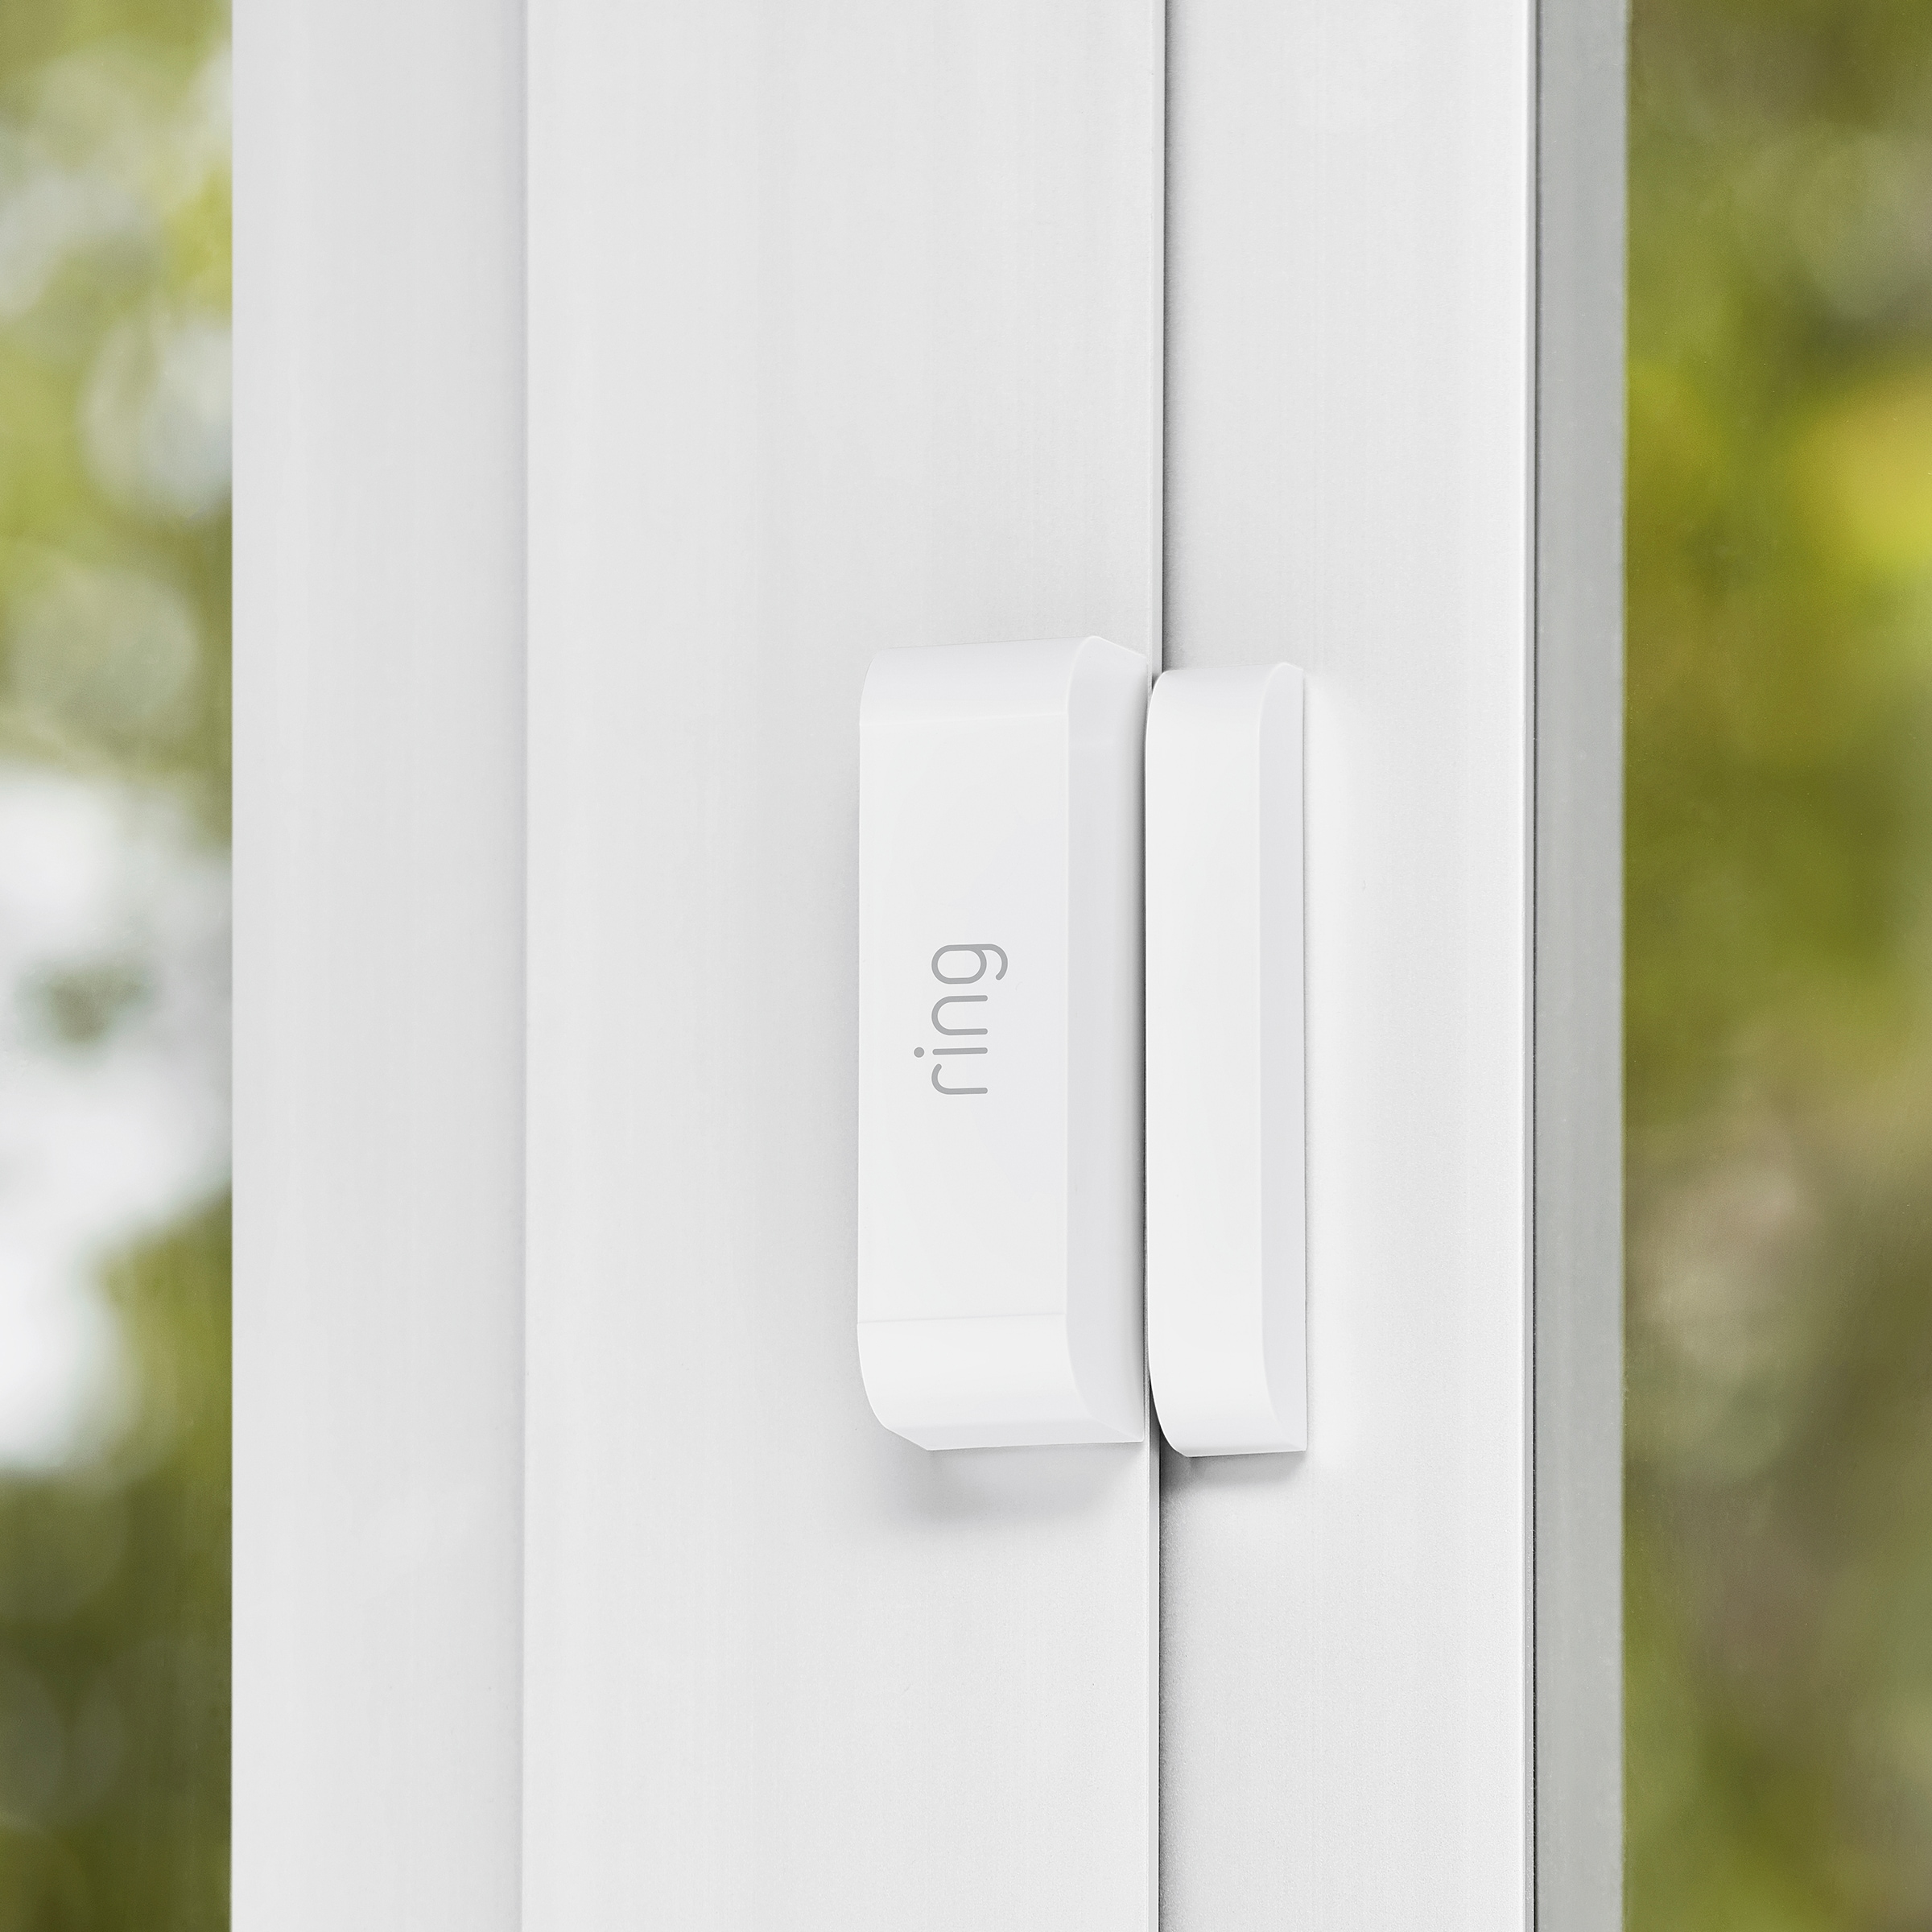 Ring™ Alarm Home Security Kit - White, 1 ct - Harris Teeter